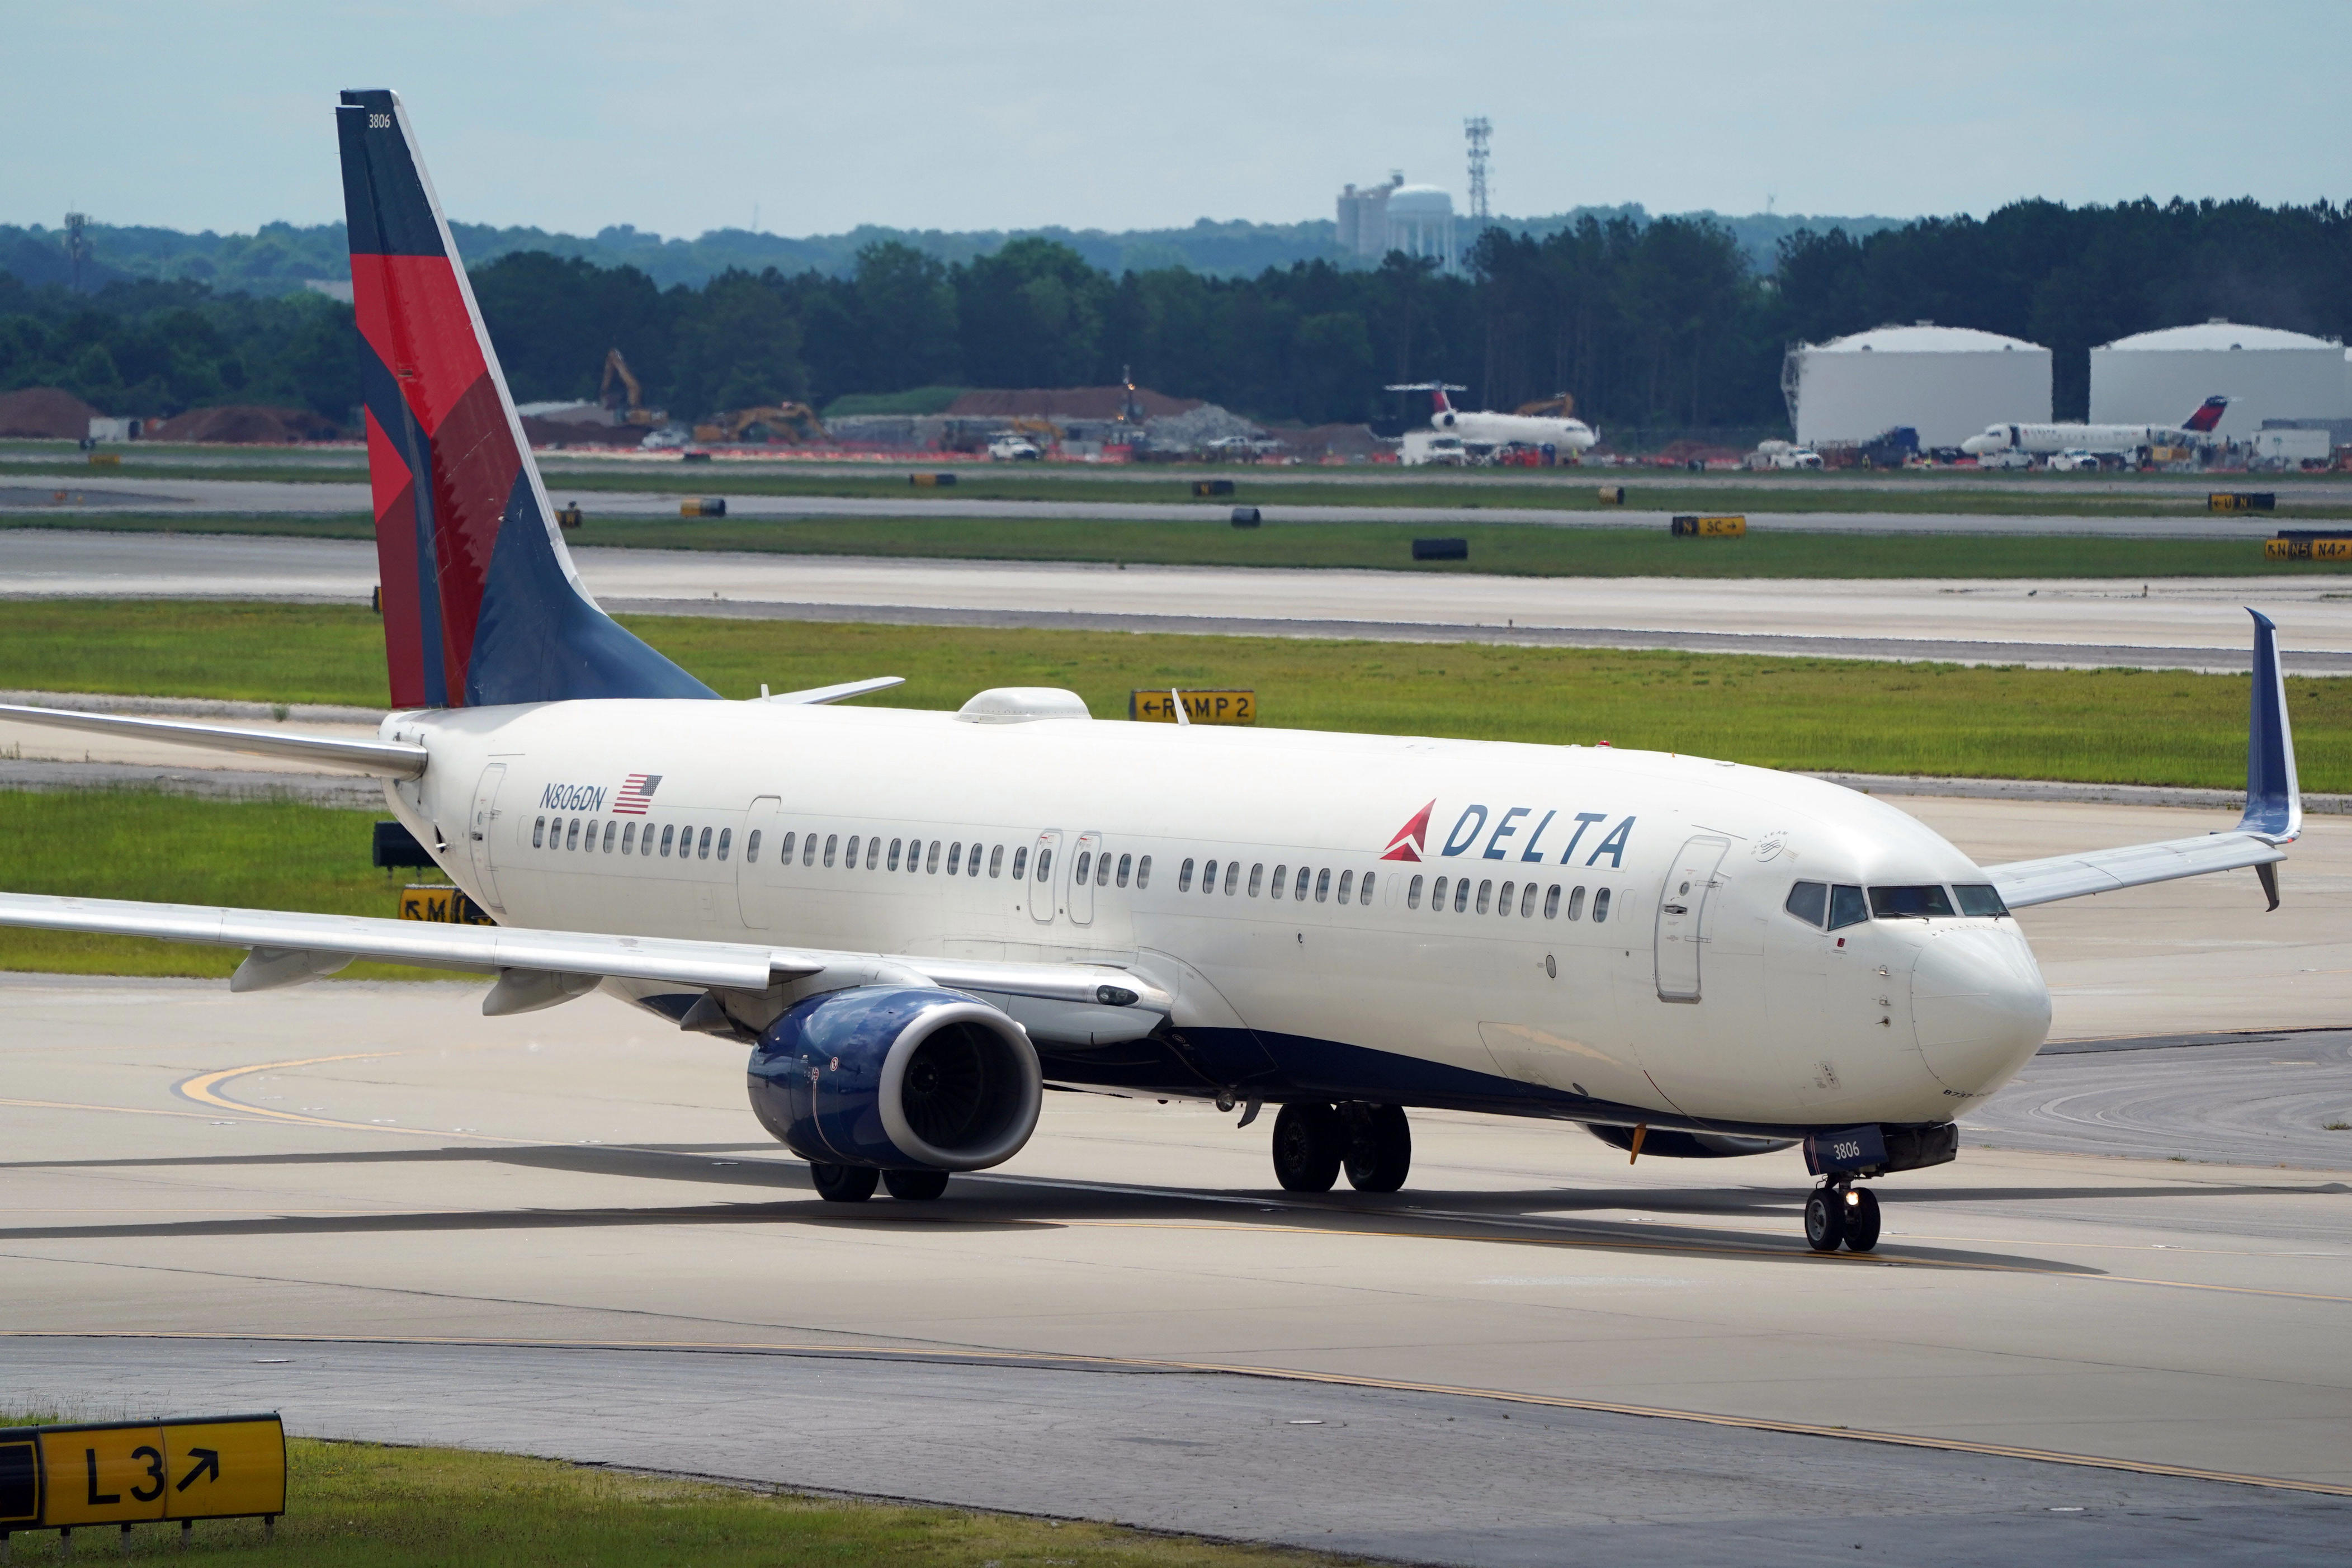 delta, southwest get top marks for customer satisfaction in j.d. power airline survey